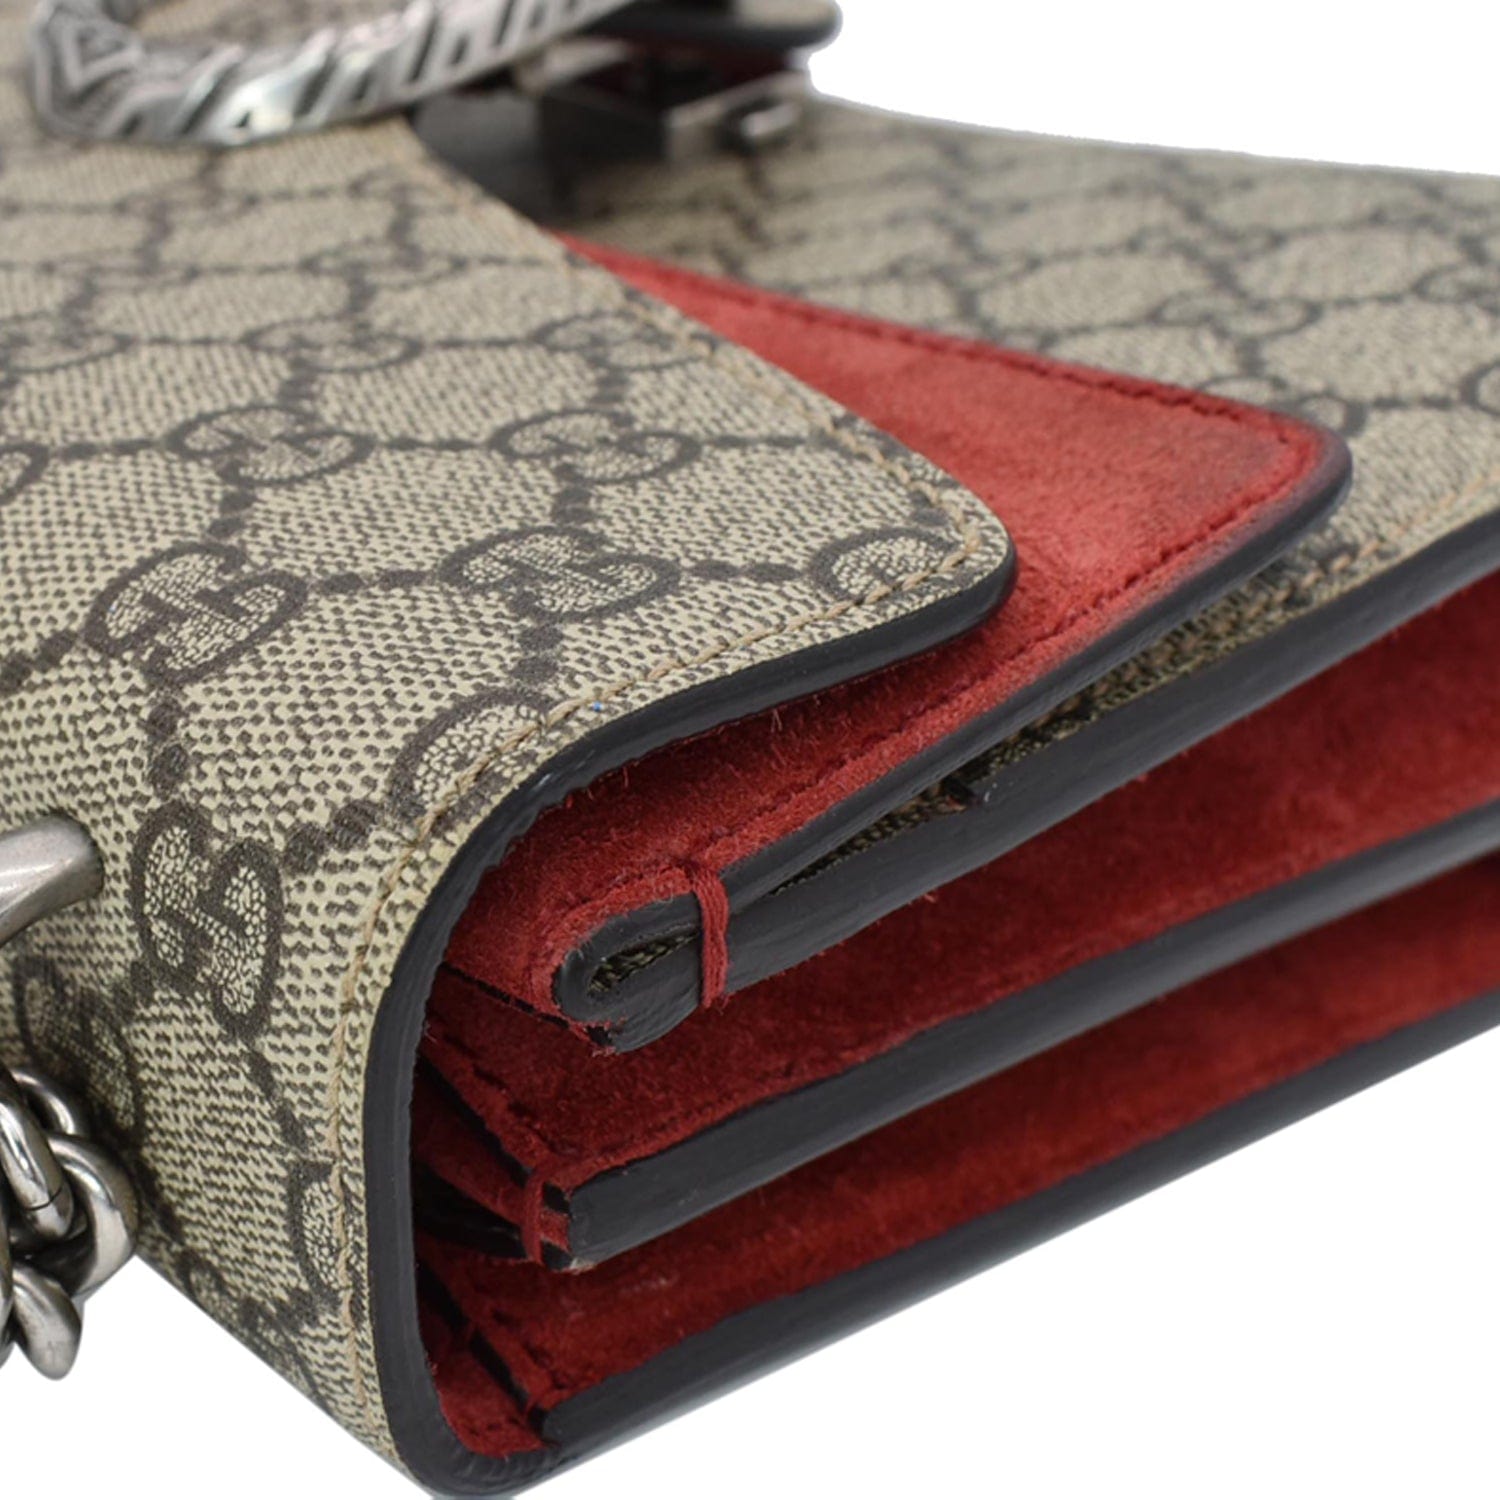 Gucci Dionysus Crossbody Bag GG Supreme Beige Monogram Canvas Red Suede